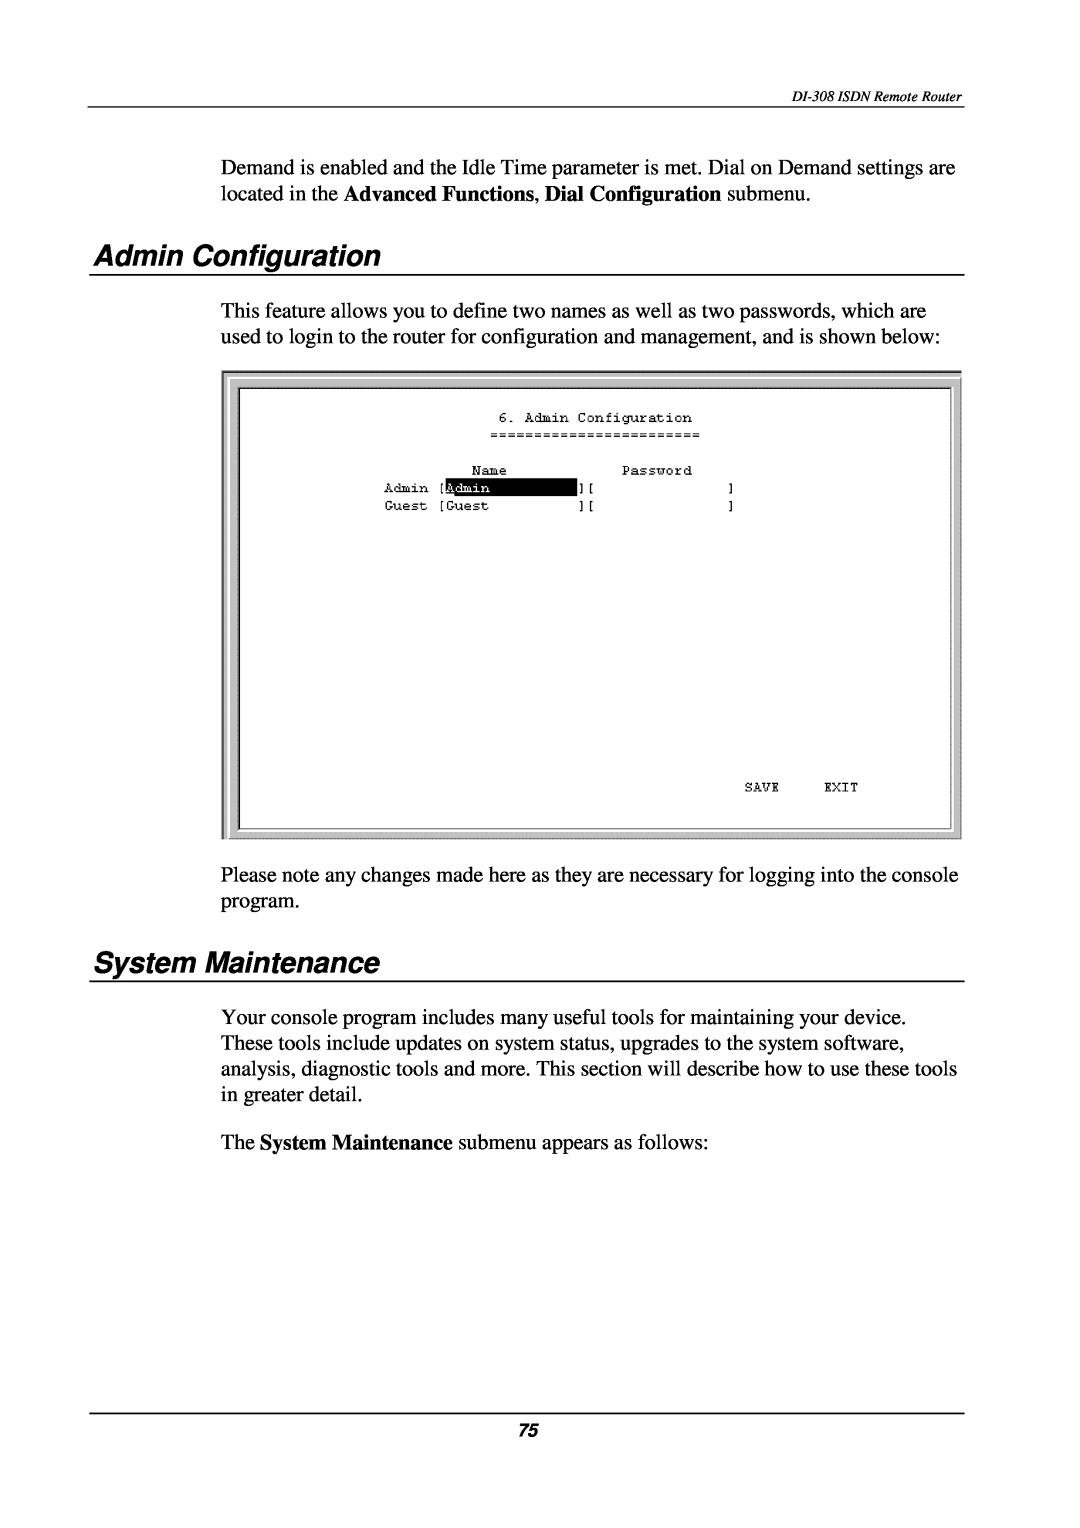 D-Link DI-308 manual Admin Configuration, System Maintenance 